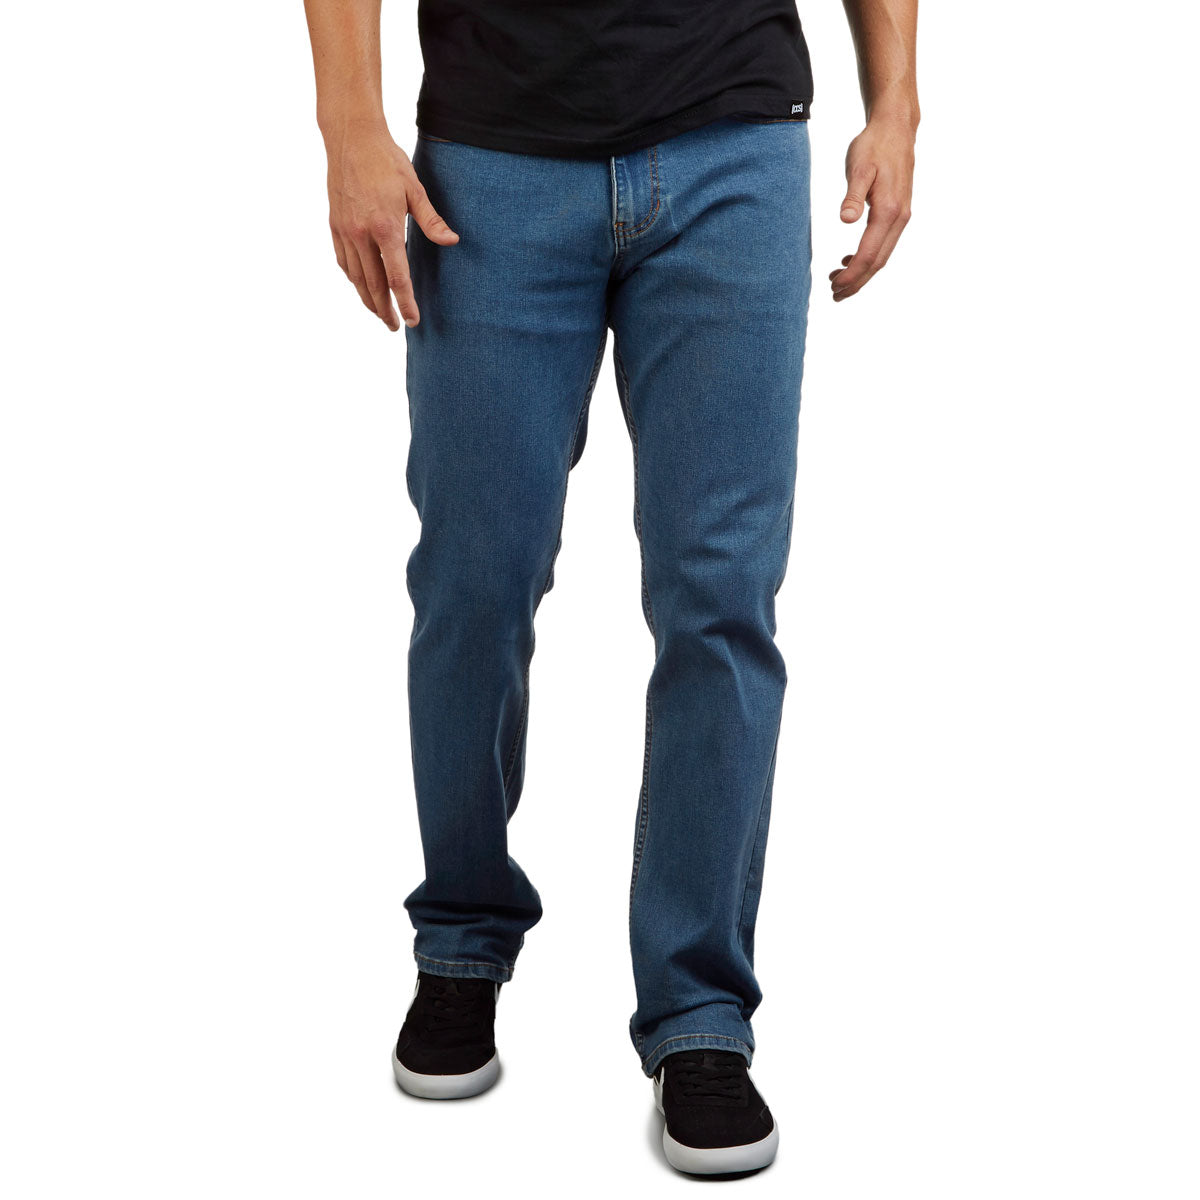 CCS Standard Plus Straight Denim Jeans - New Rinse image 1